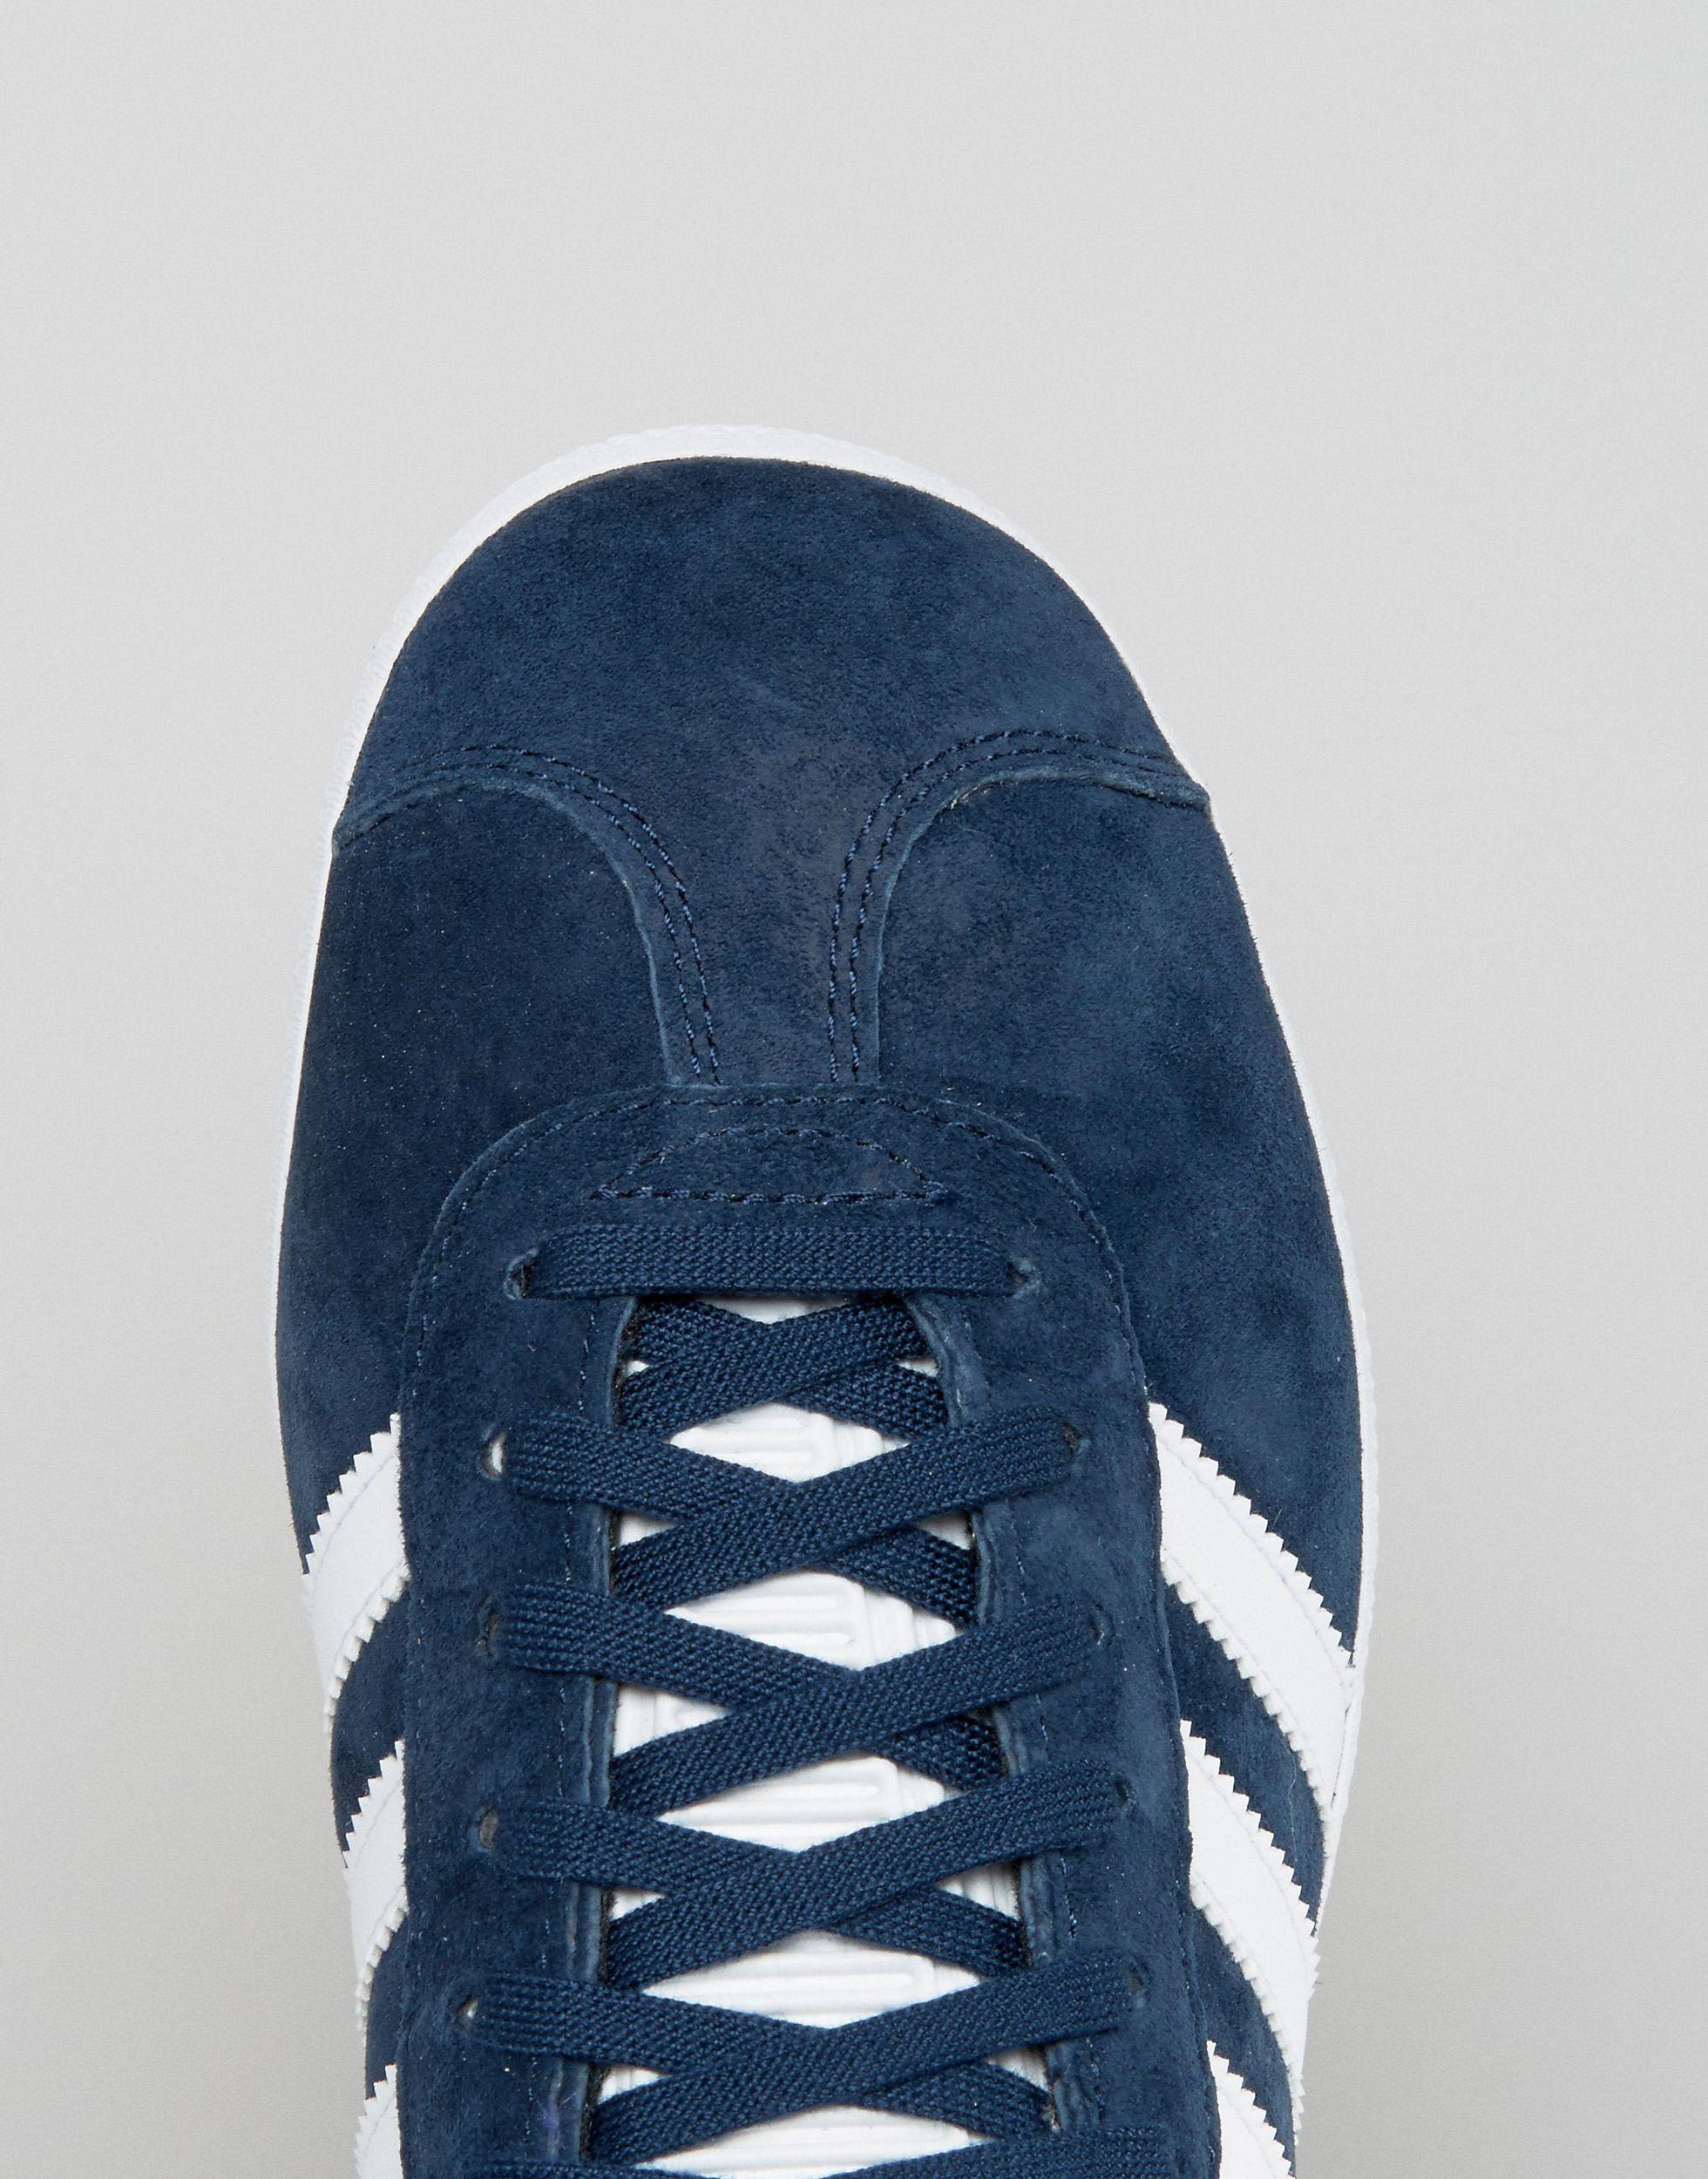 adidas Originals Suede Gazelle Sneakers in Navy (Blue) - Save 41% - Lyst